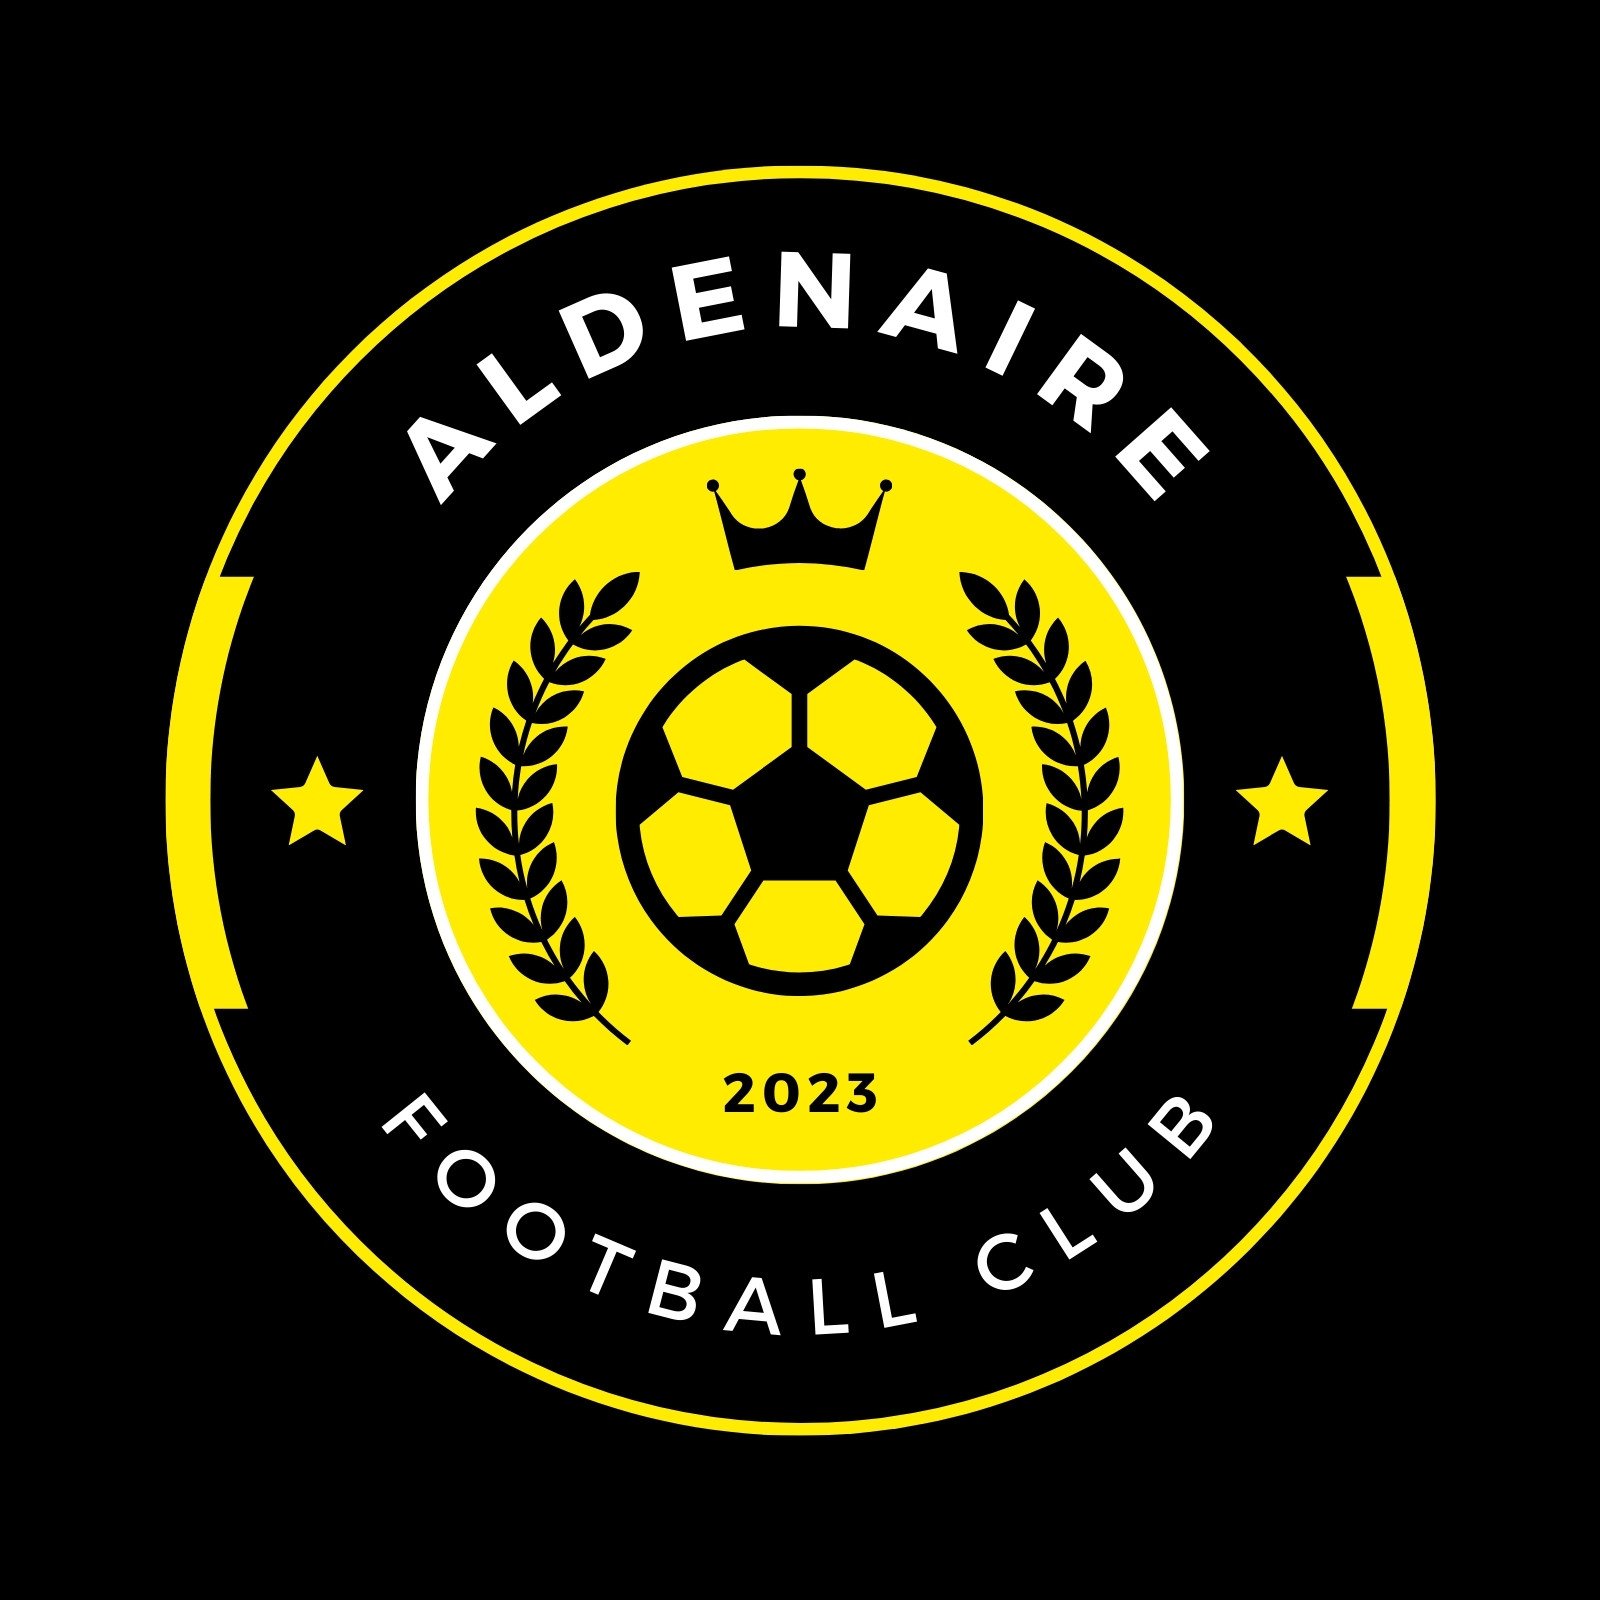 Football Club PNG Image, Football Club Identity, Identity, Soccer Club,  Sports PNG Image For Free Download | Football logo design, Team logo  design, Soccer logo